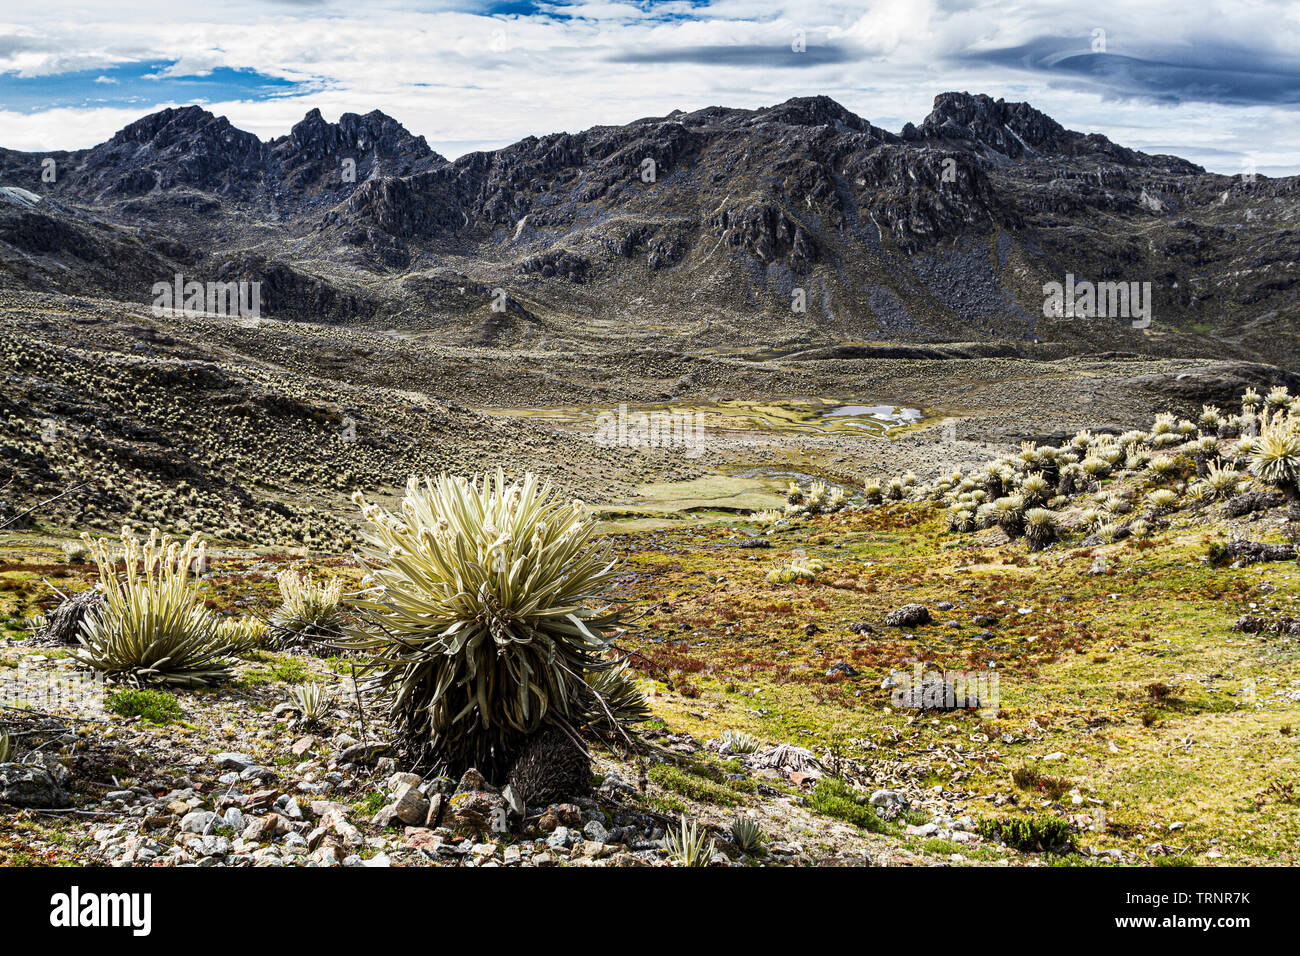 View of the Andes Mountains in Sierra de la Culata National Park. Merida, Merida state, Venezuela. Stock Photo